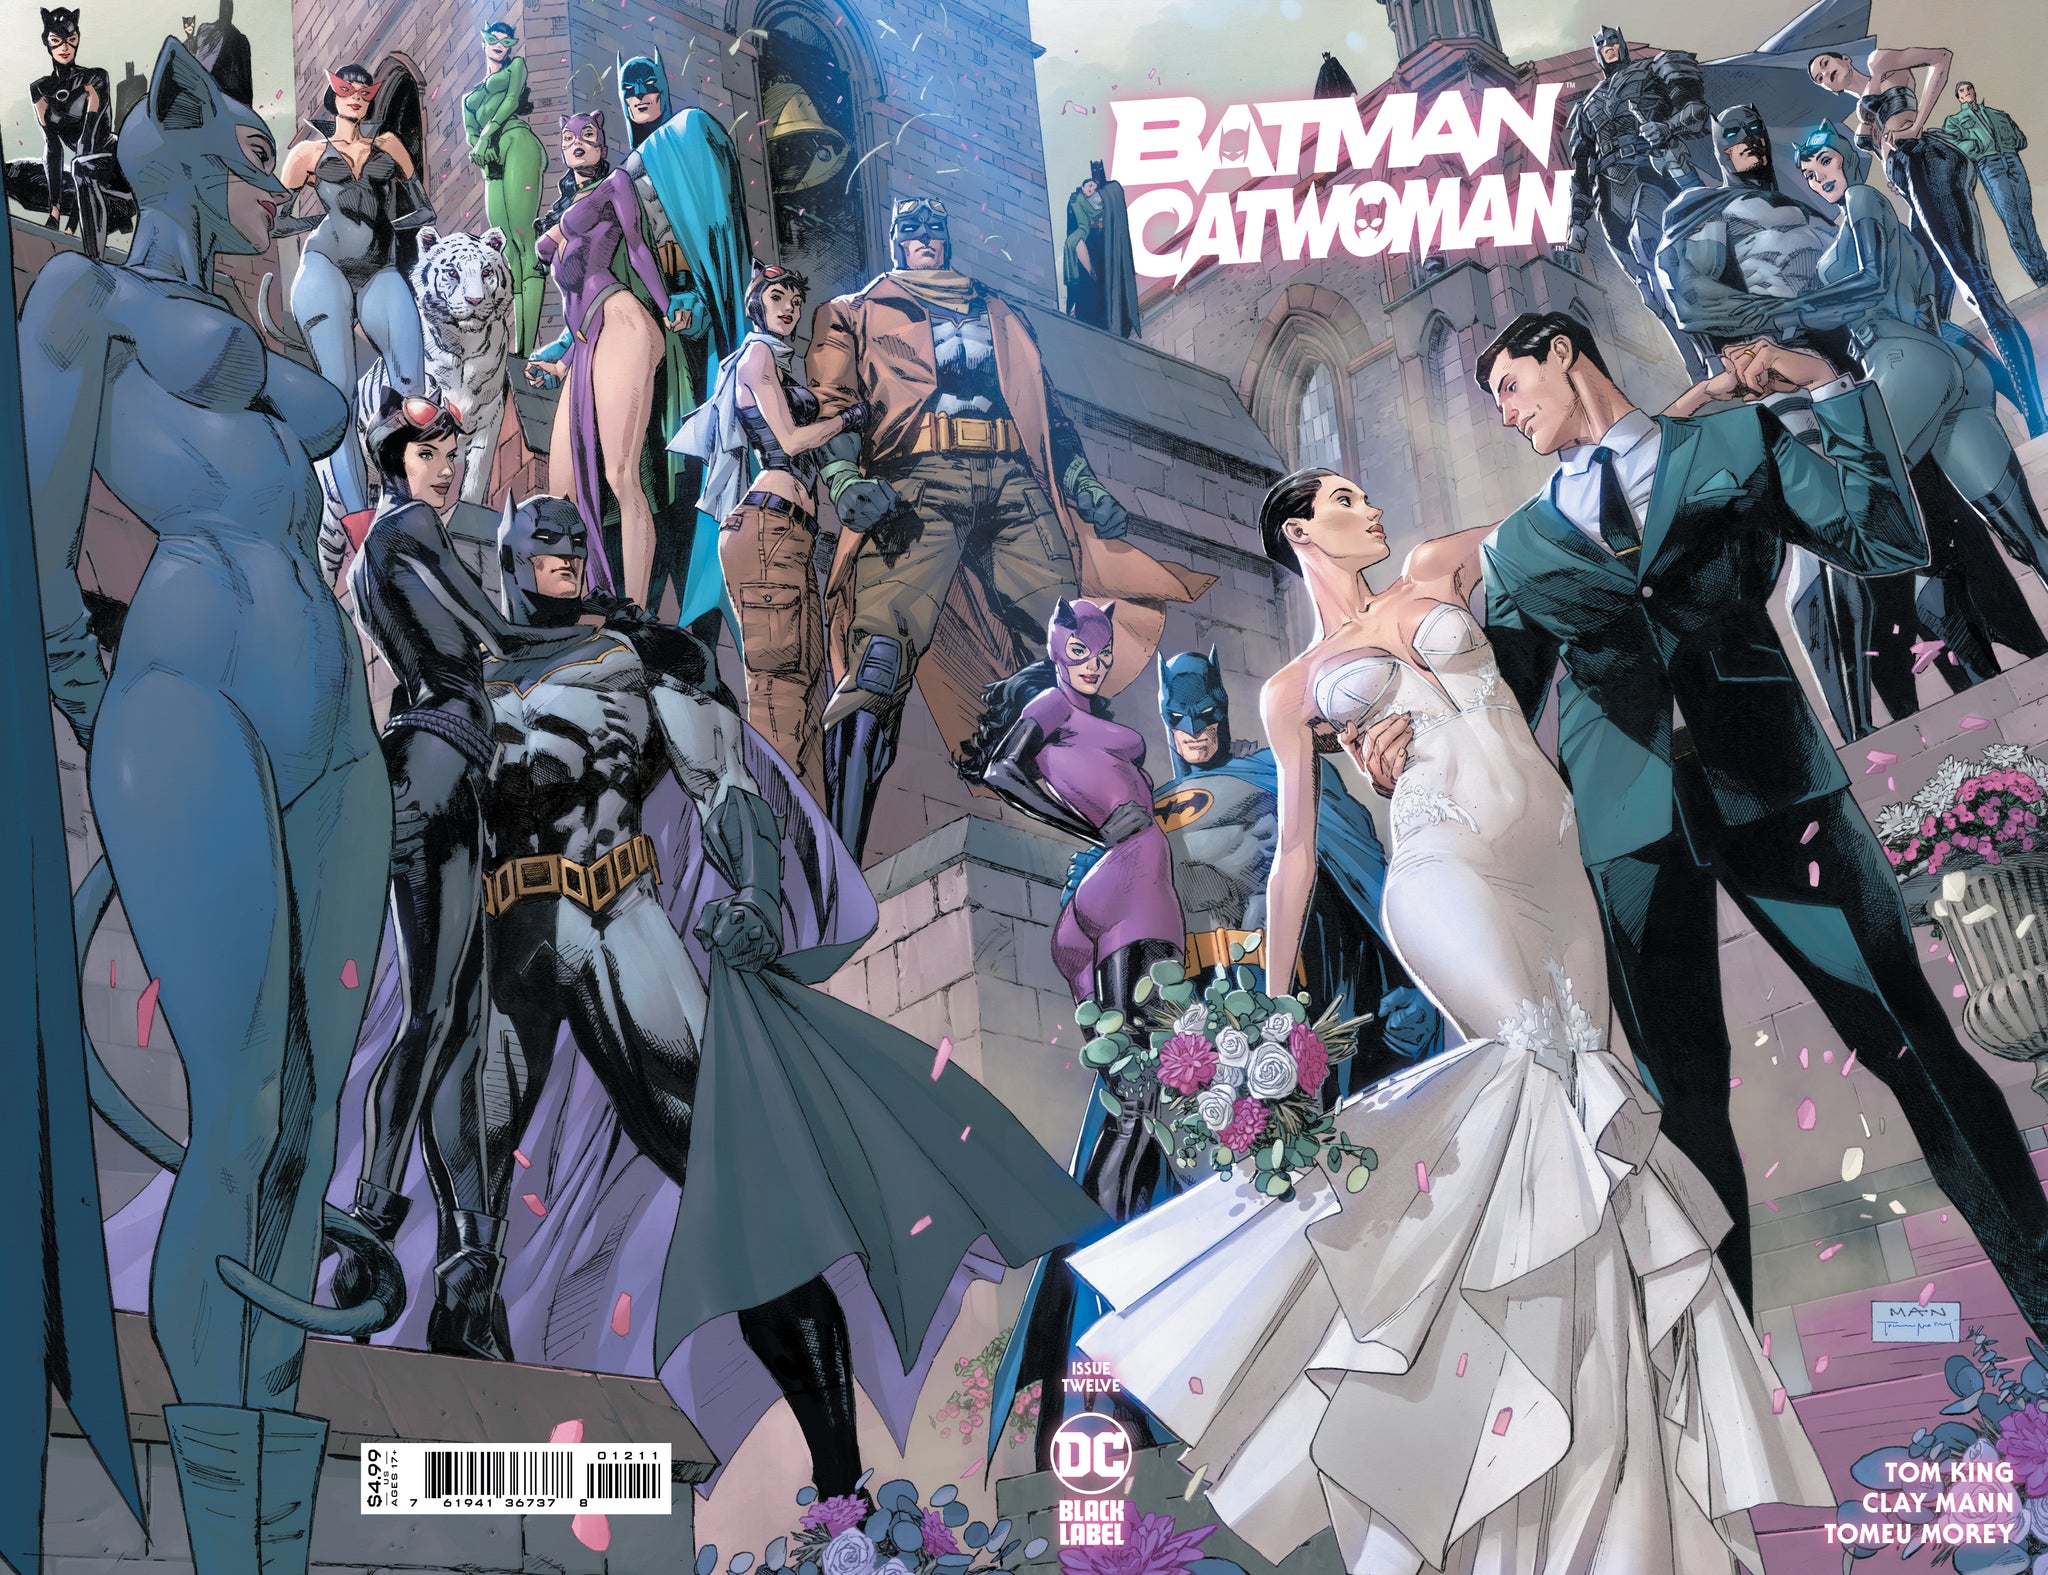 BATMAN CATWOMAN #12 (OF 12)